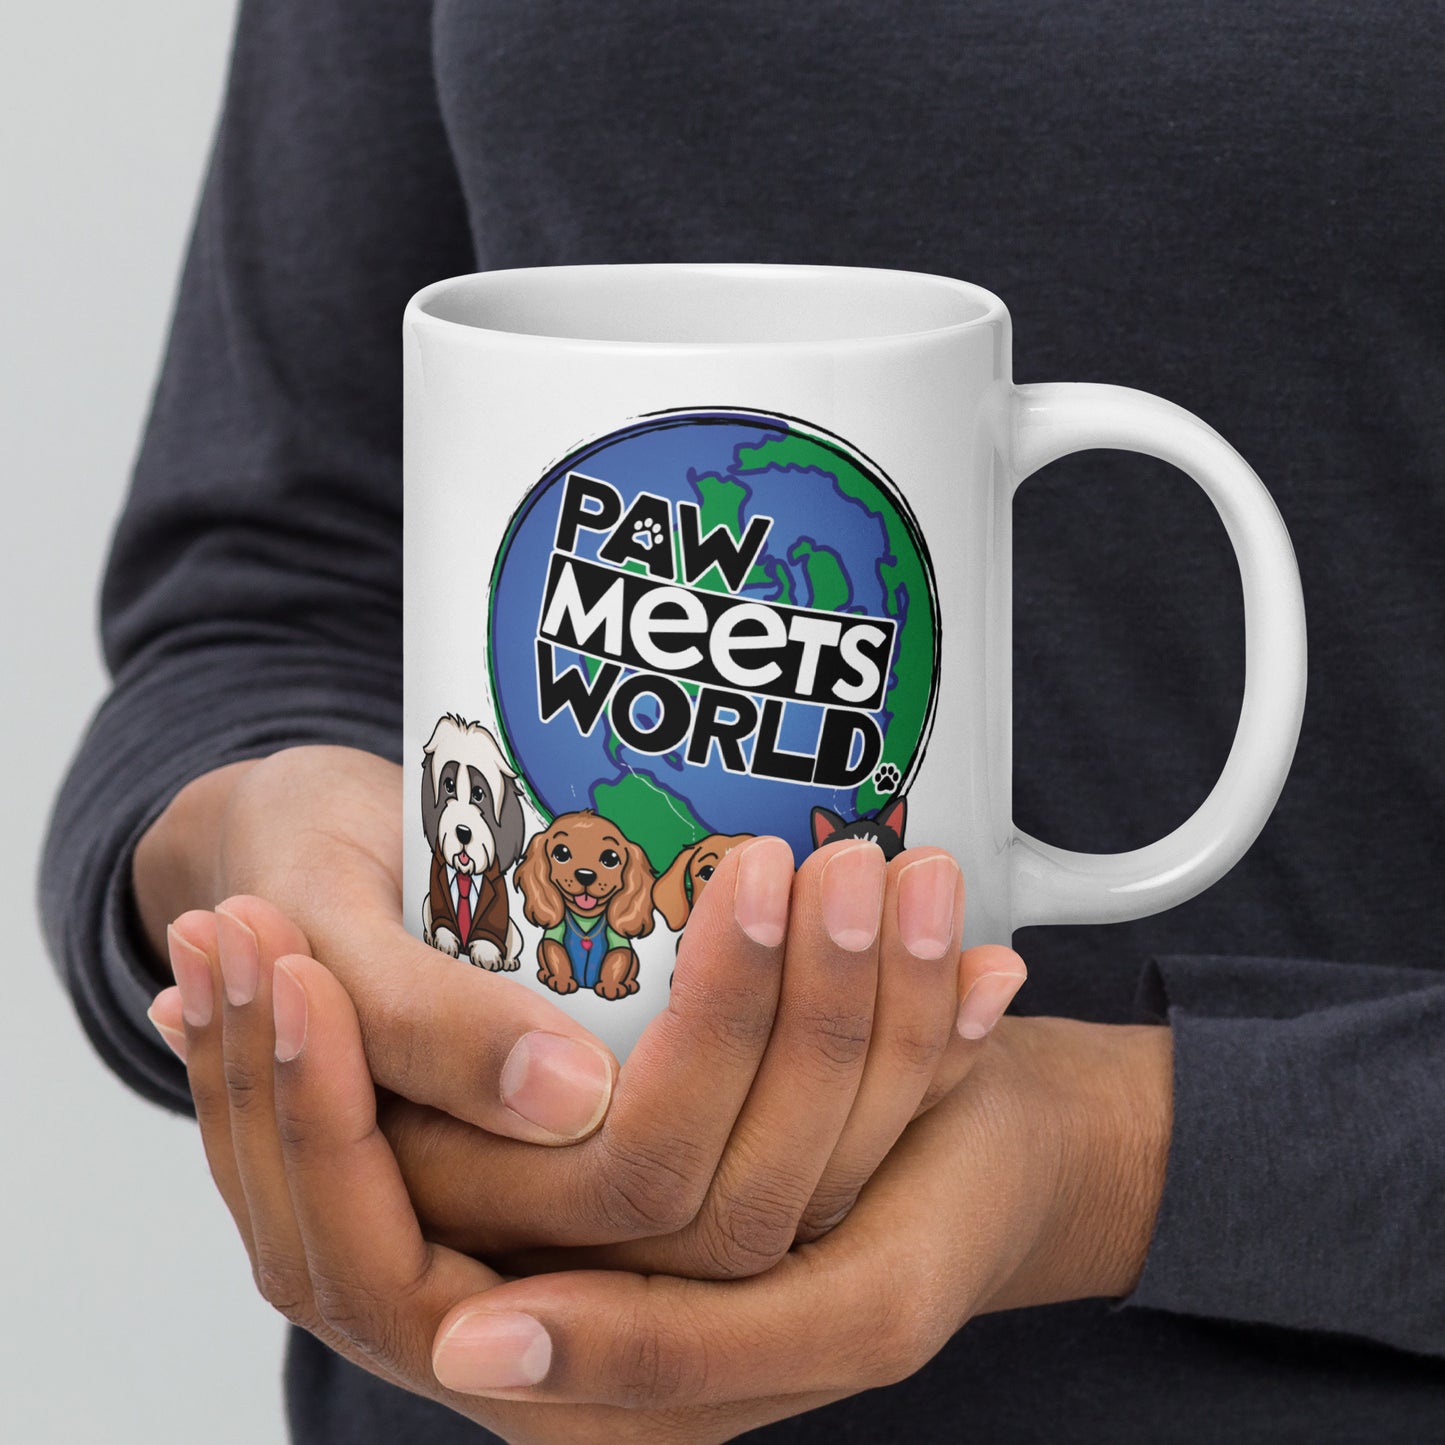 Paw Meets World - White glossy mug